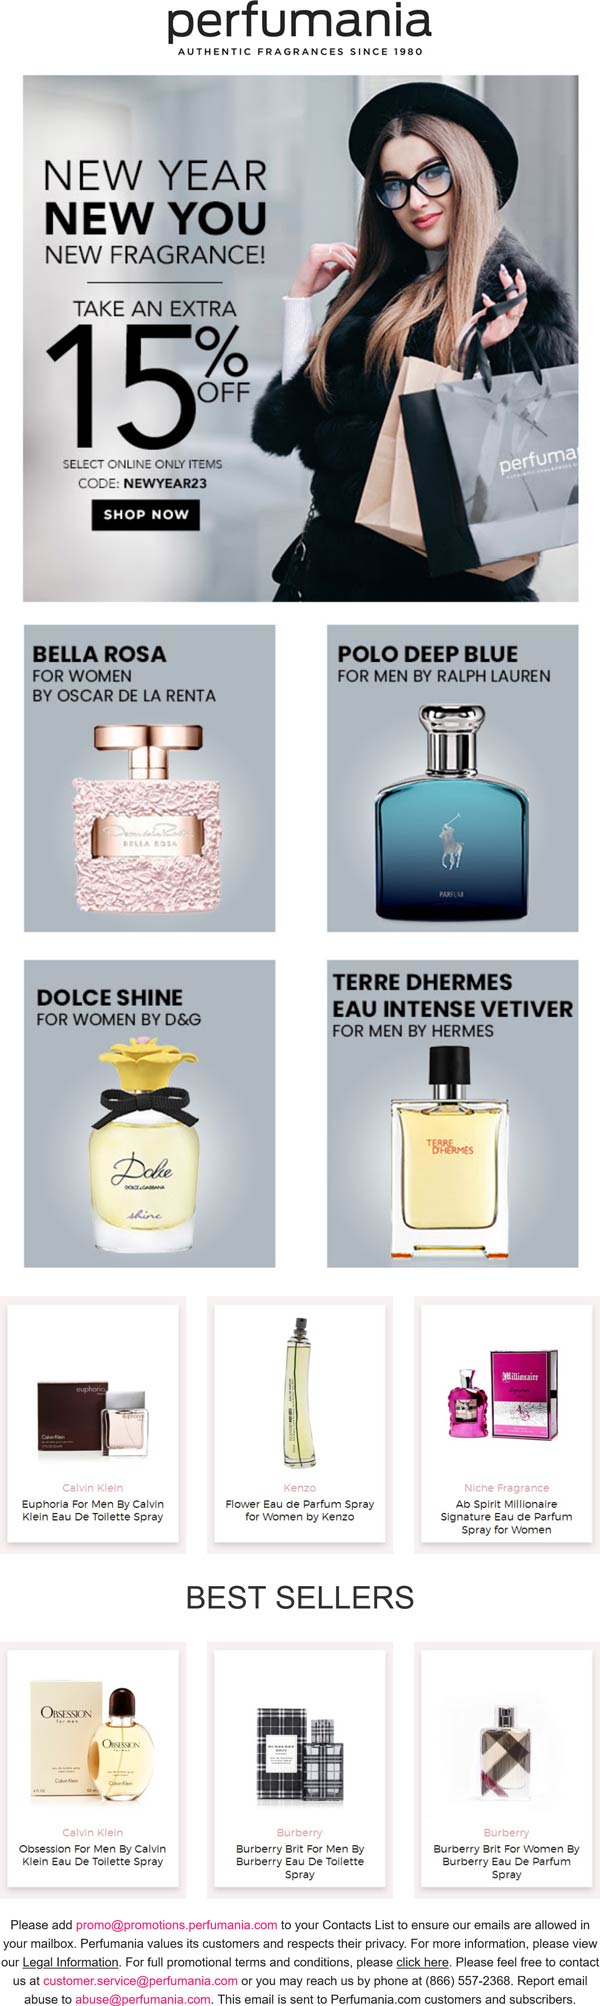 Perfumania stores Coupon  Extra 15% off various fragrances at Perfumania via promo code NEWYEAR23 #perfumania 